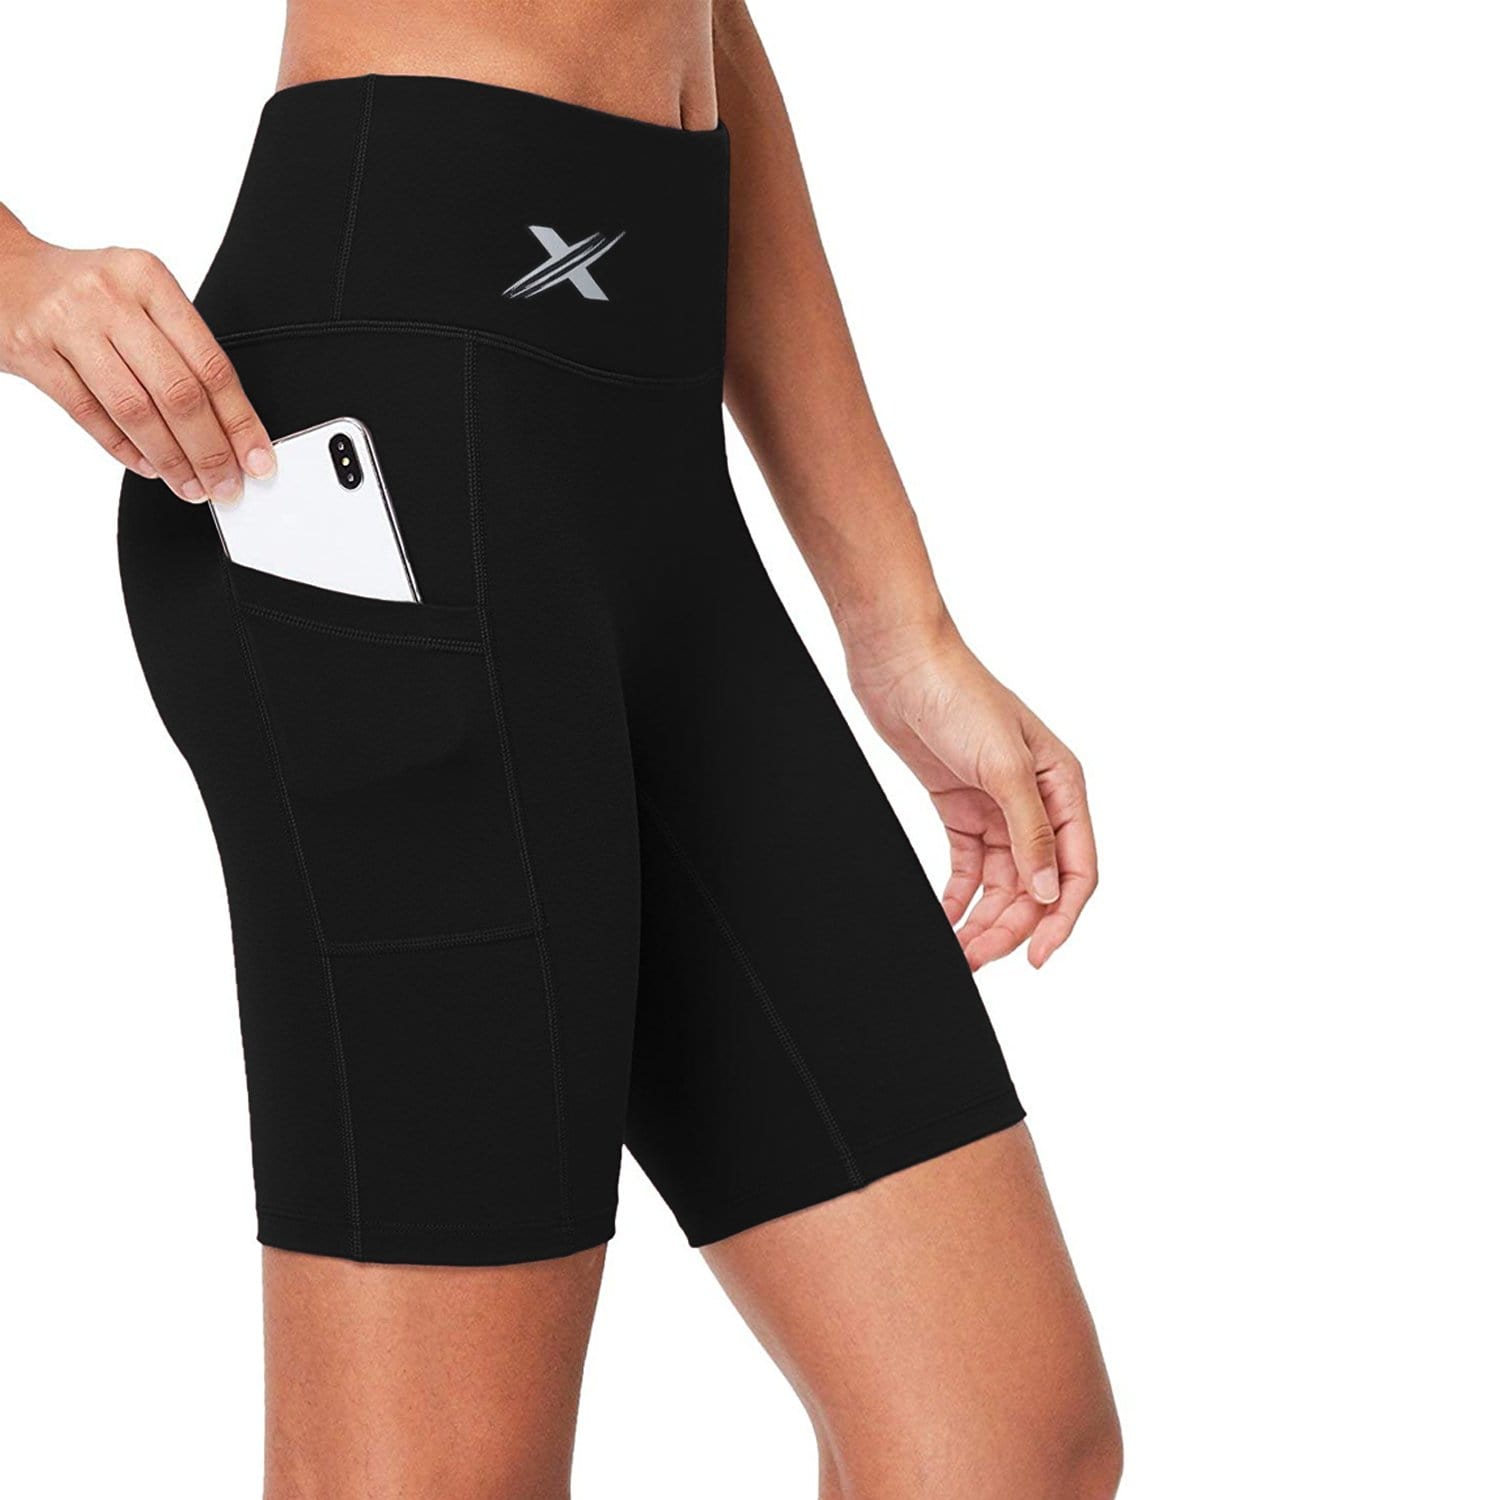  HIGHDAYS 5 Biker Shorts For Women - High Waist Tummy Control  Stretch Spandex Workout Shorts For Yoga Running Athletic Gym